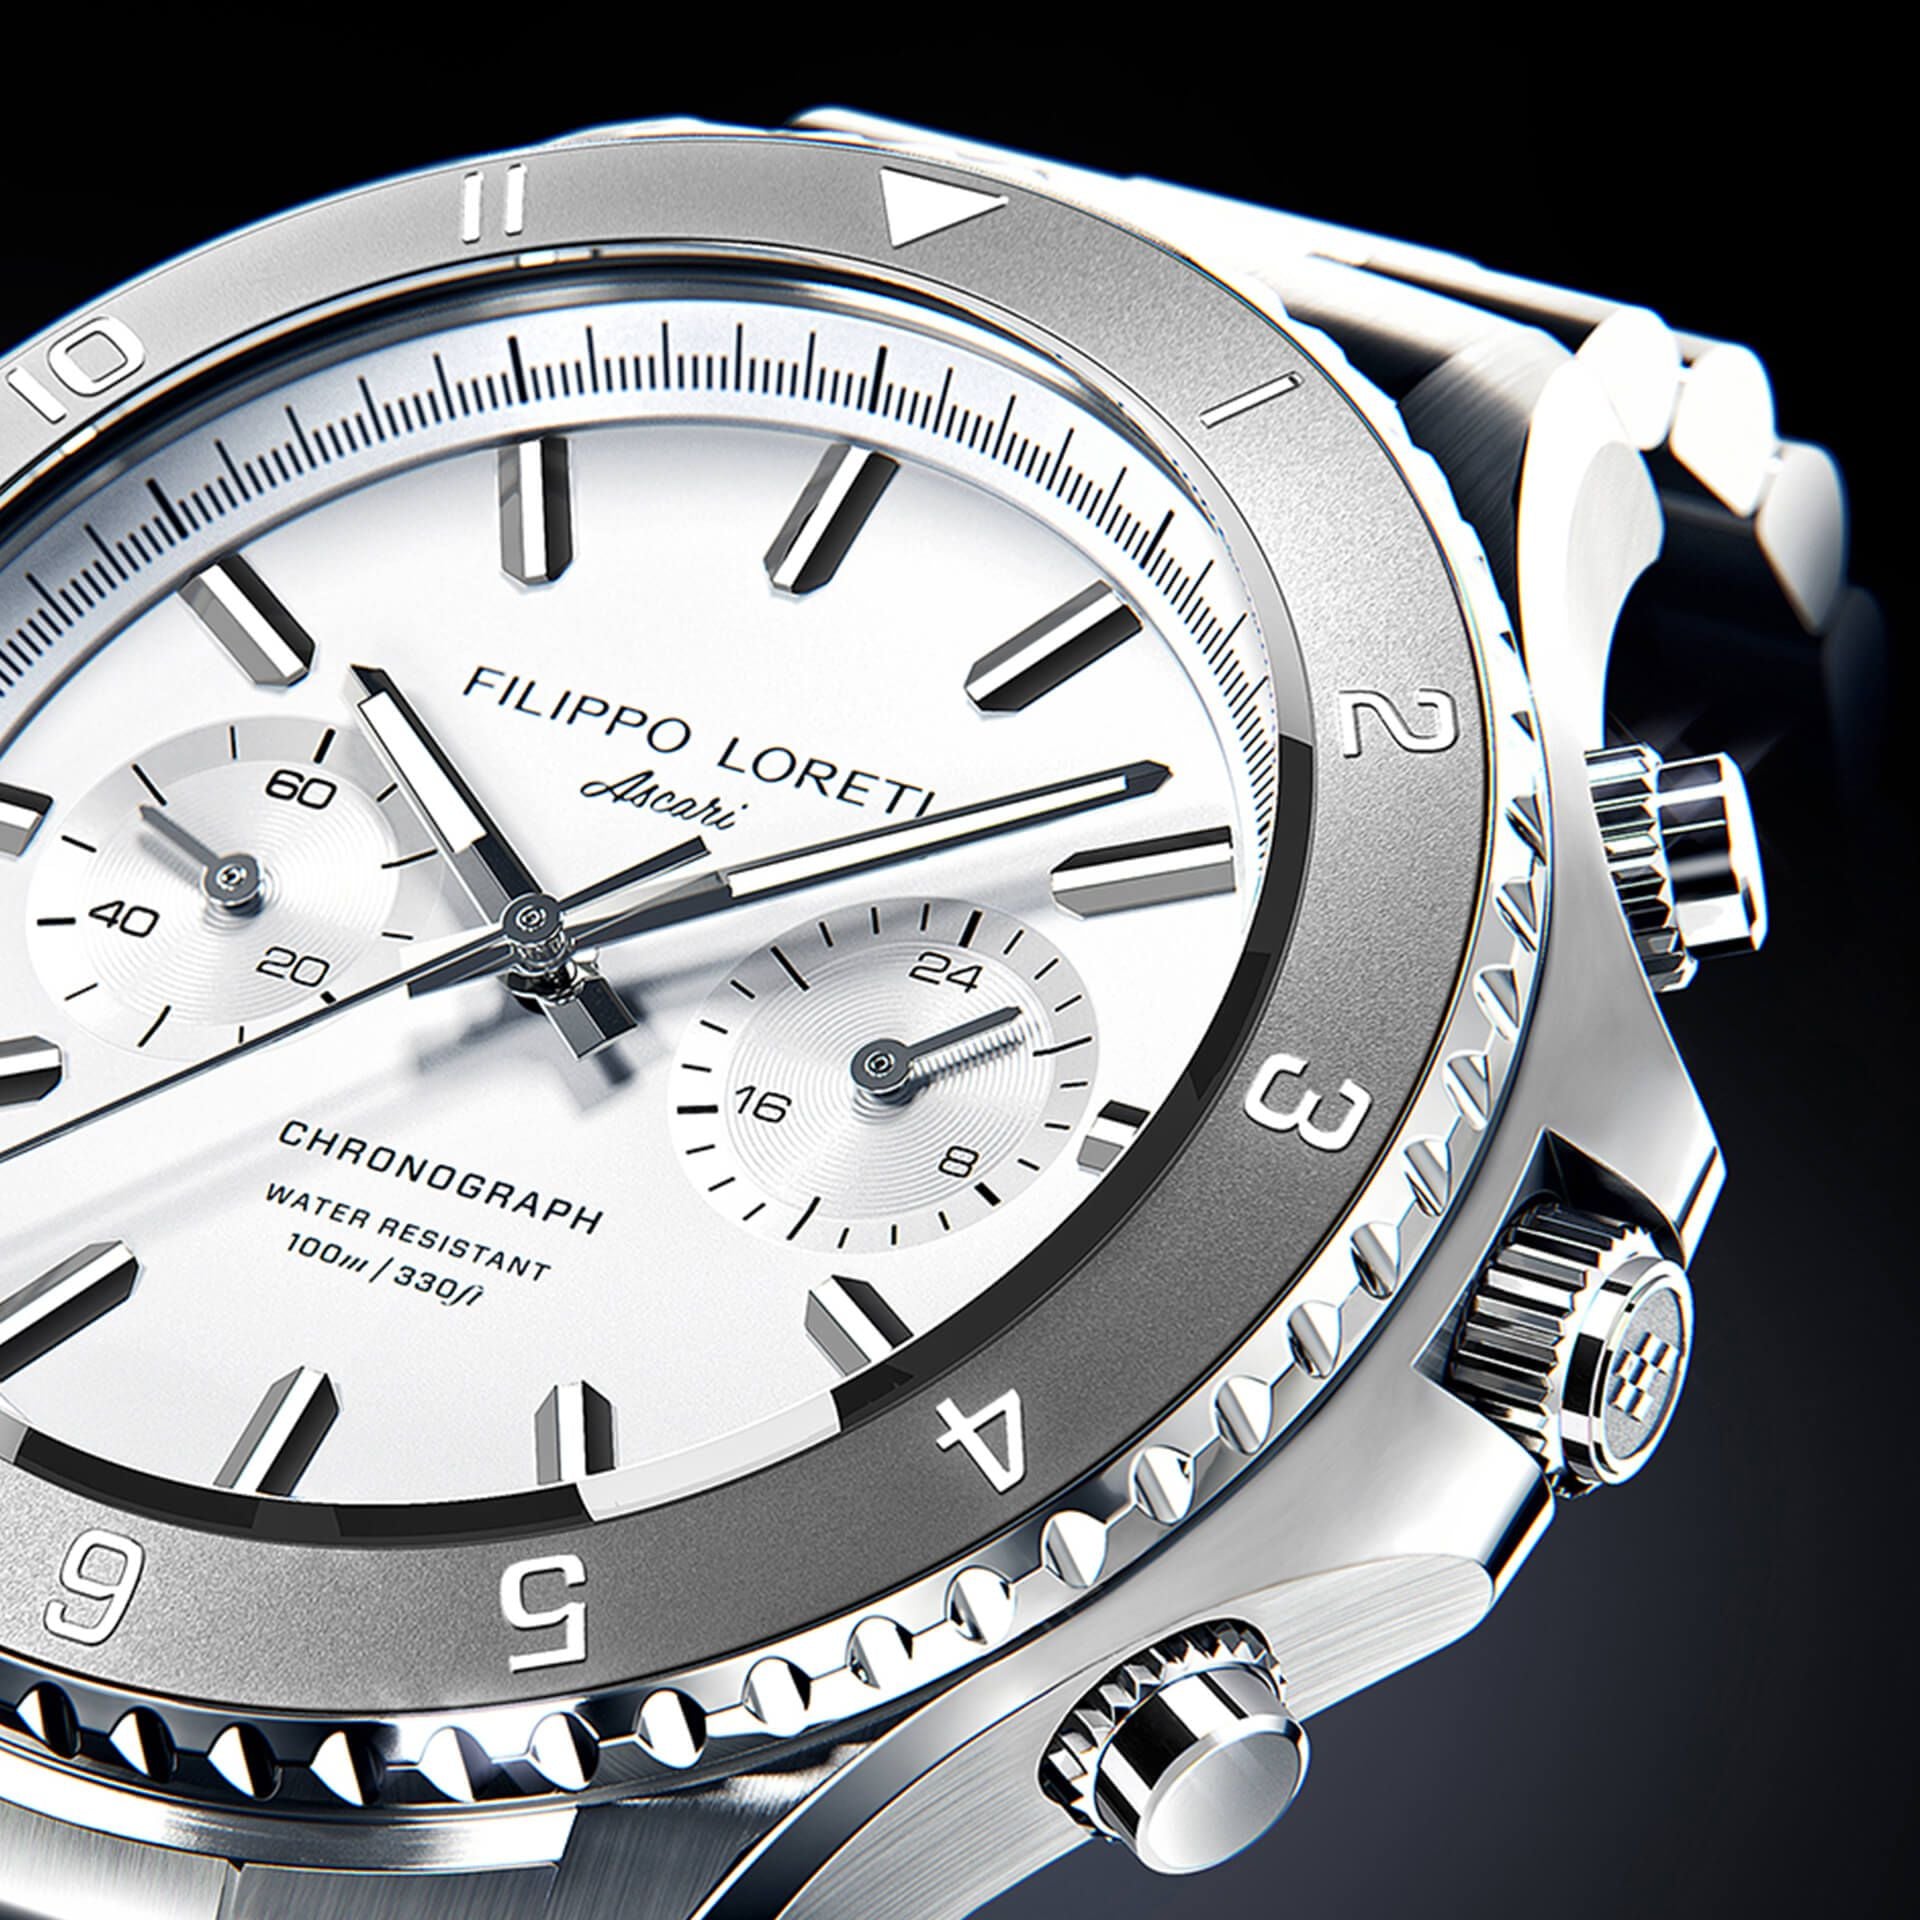 Best stainless steel watches for men – Filippo Loreti